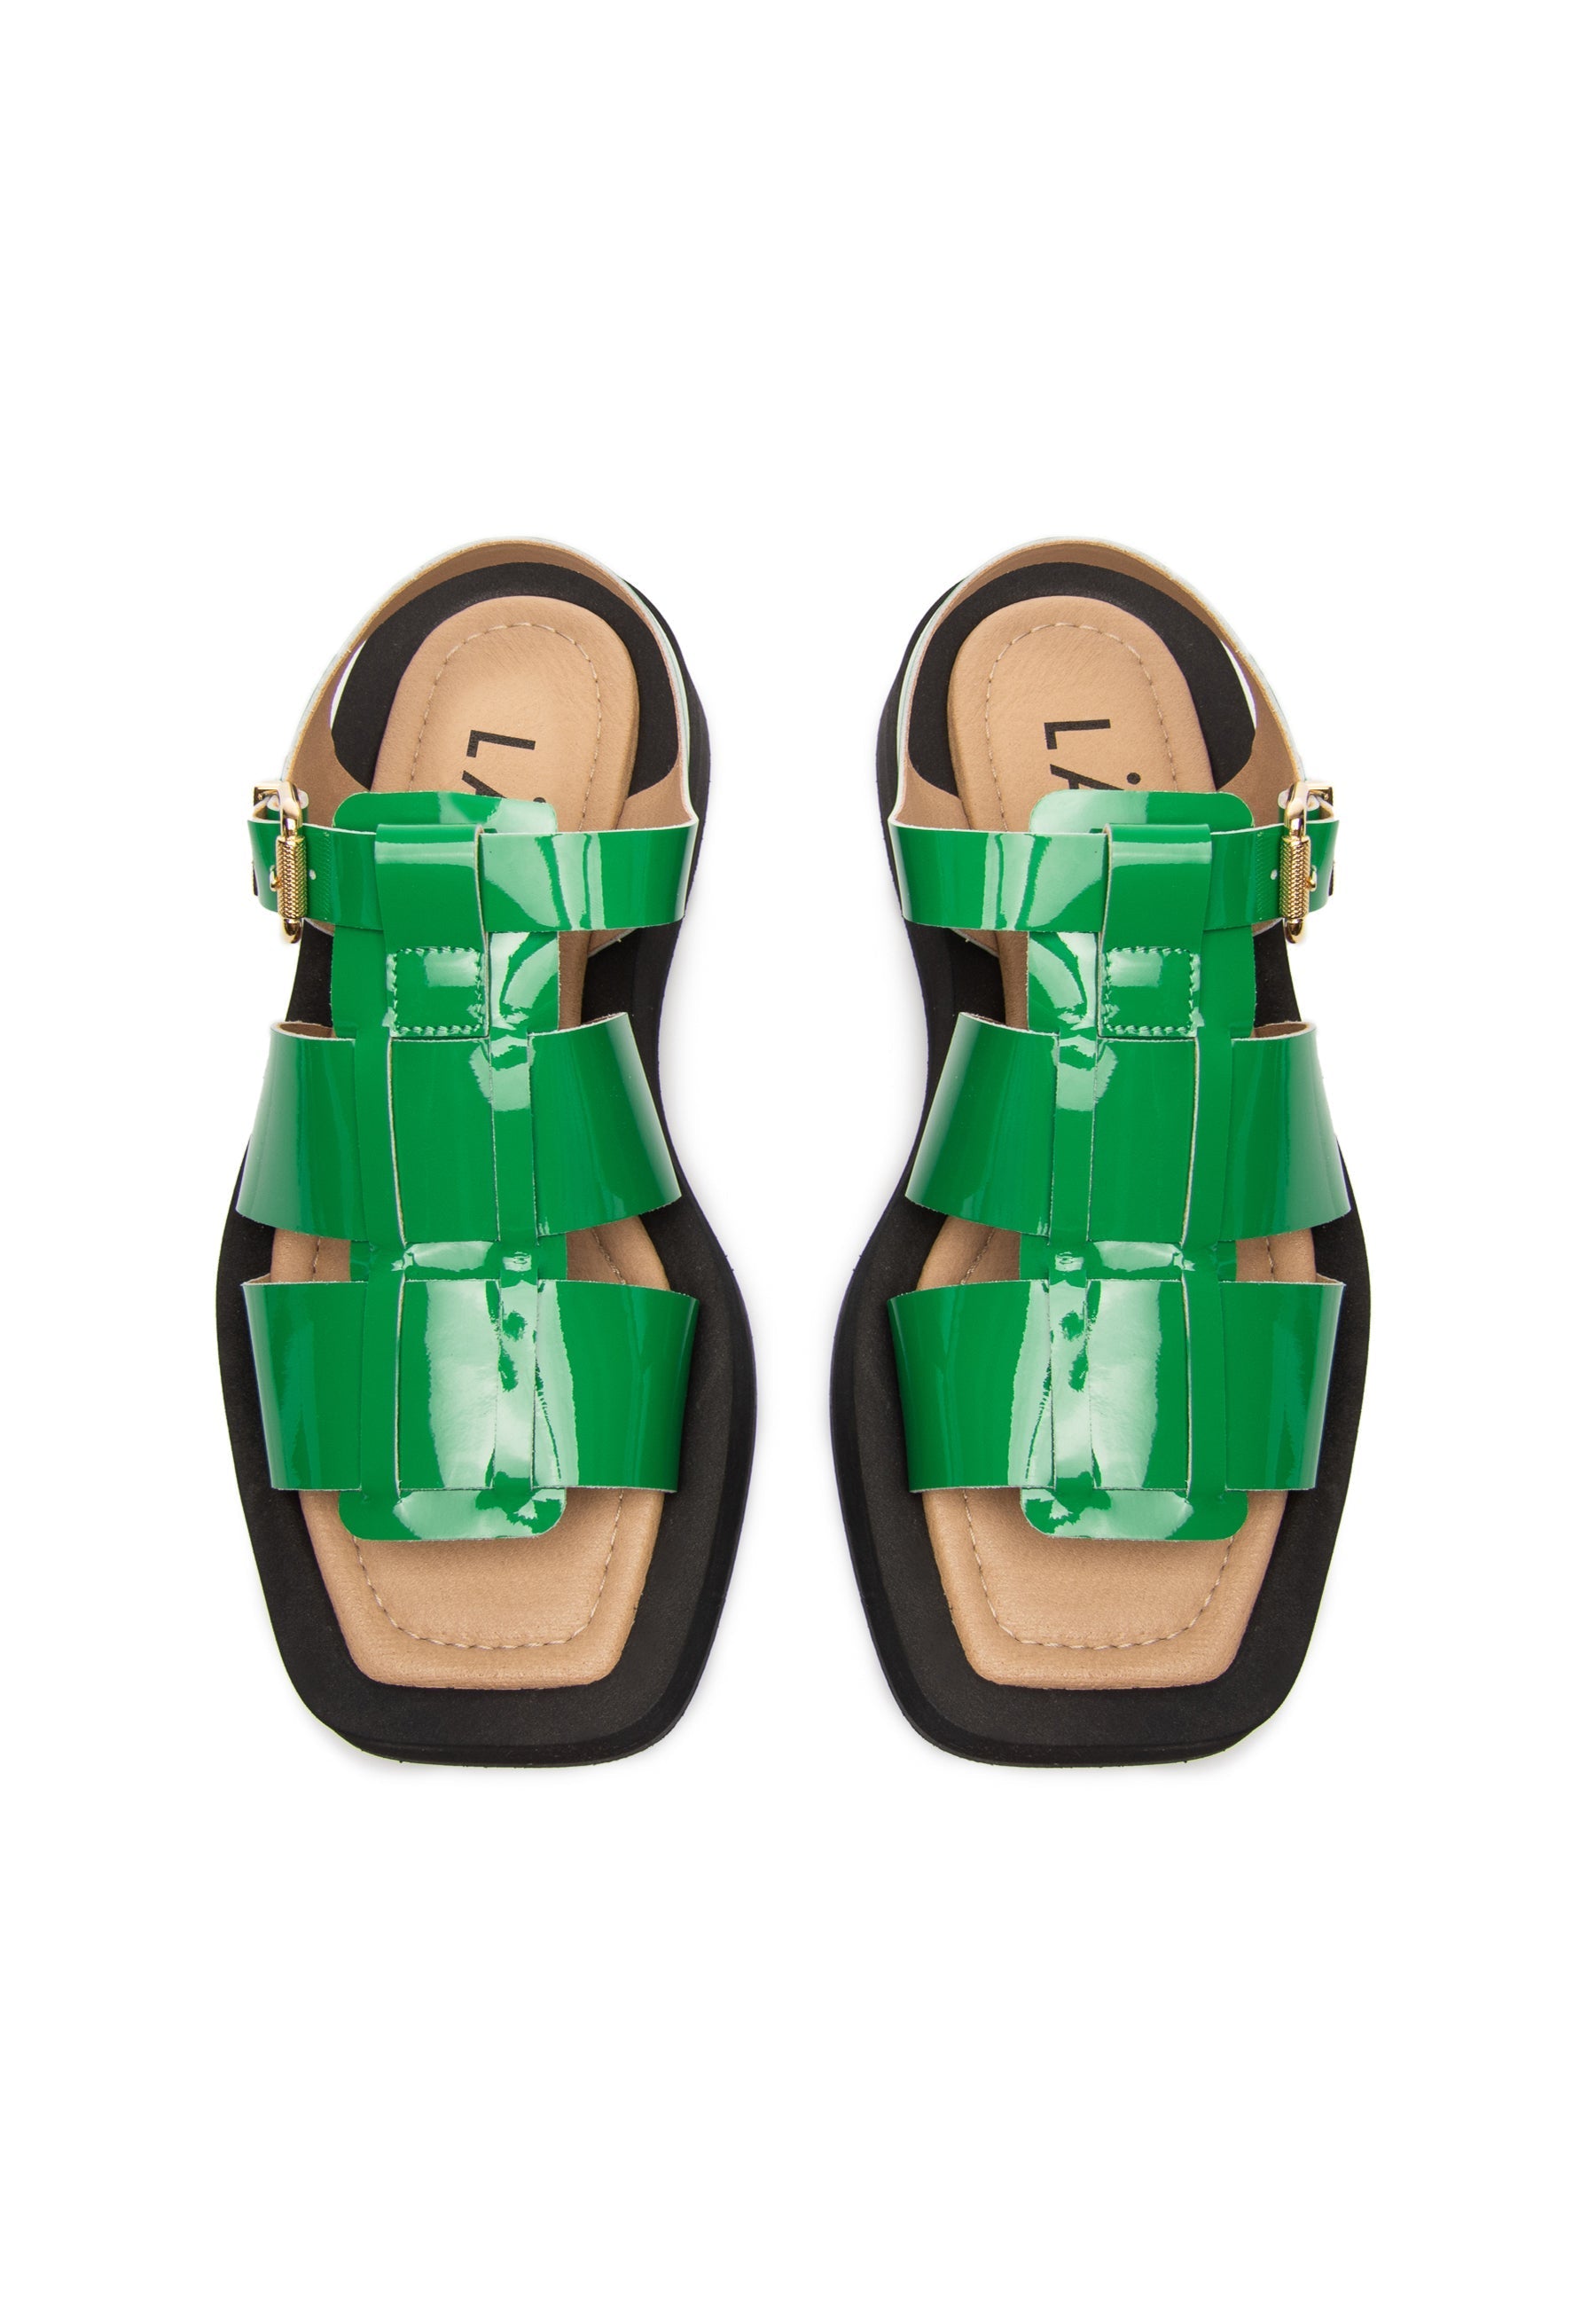 LÄST Samantha - Patent Leather - Green Sandals Green